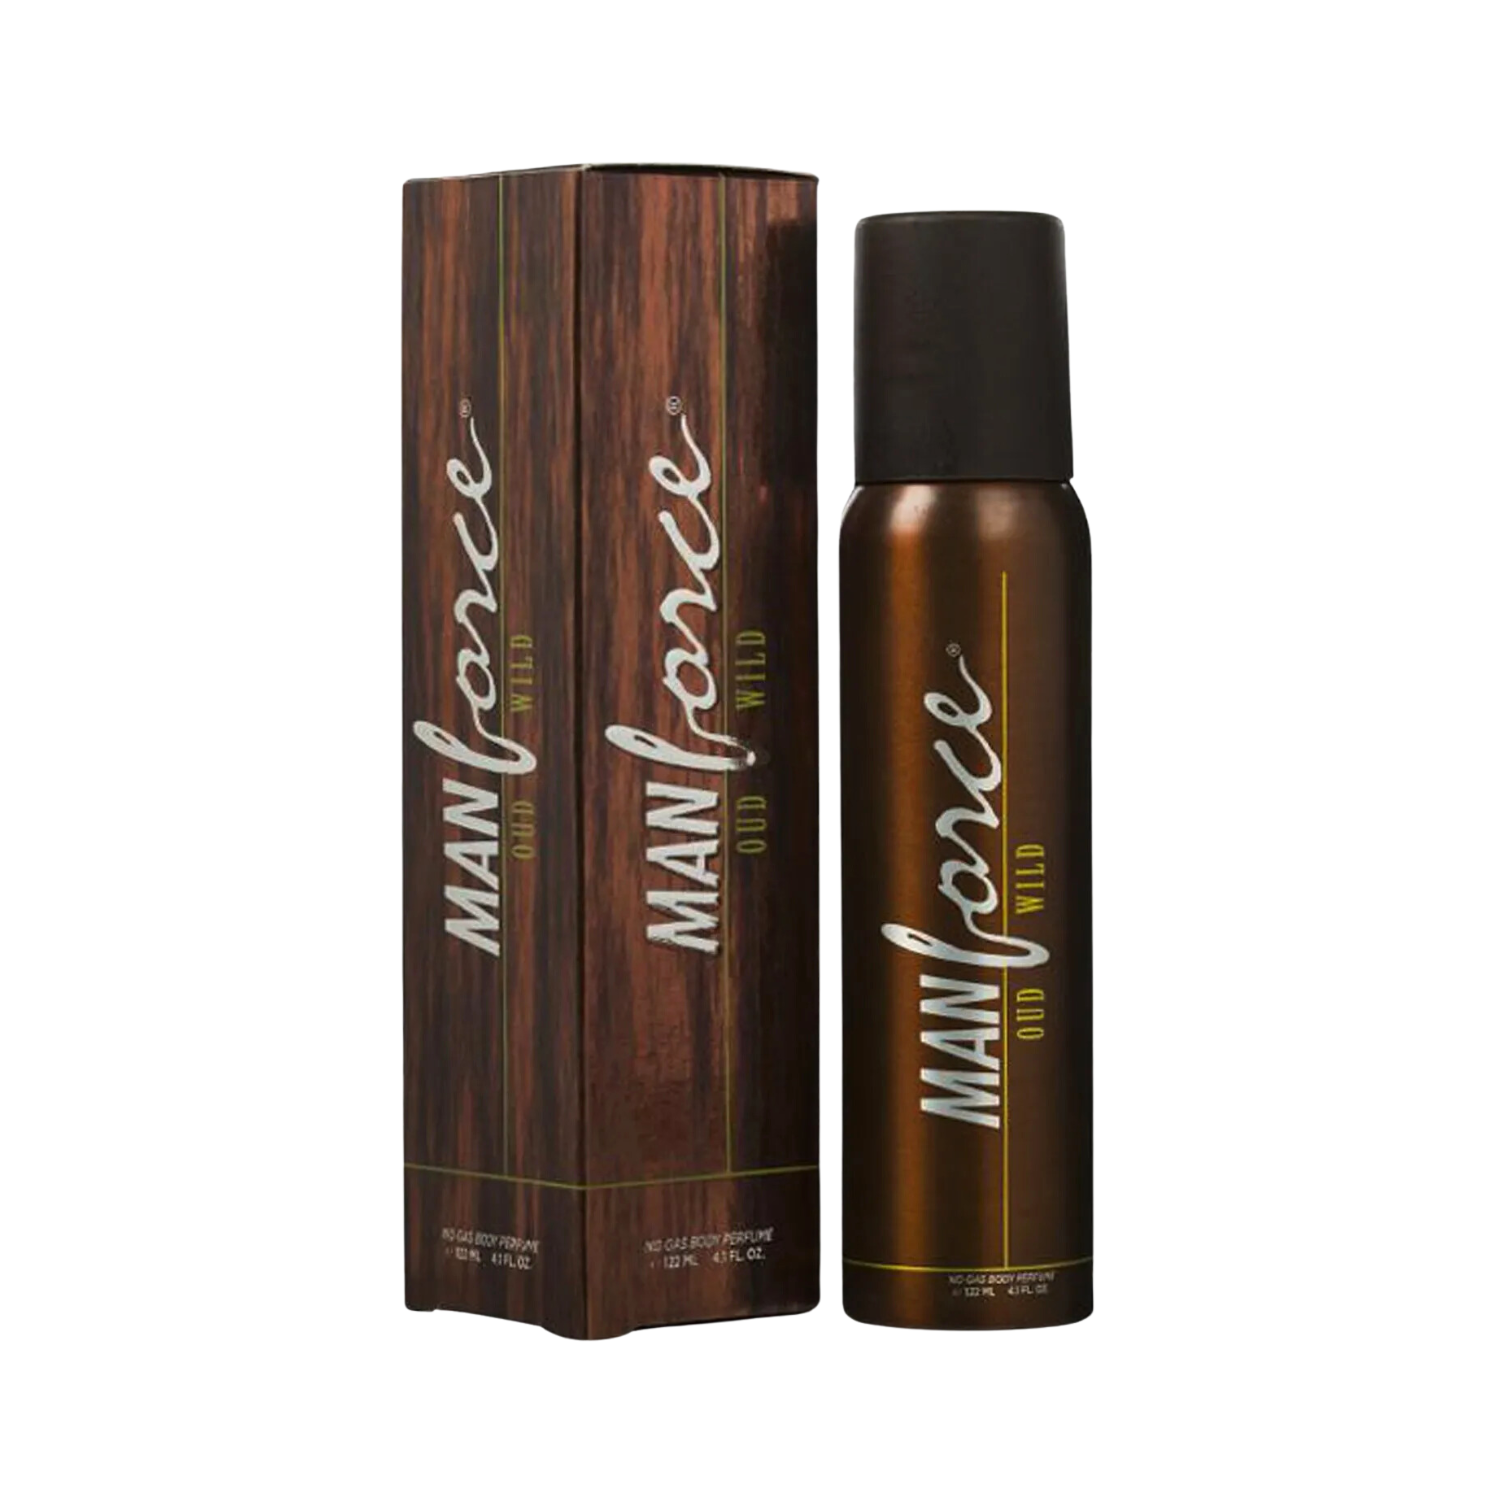 manforce-oud-wild-perfume-body-spray-for-men-122ml